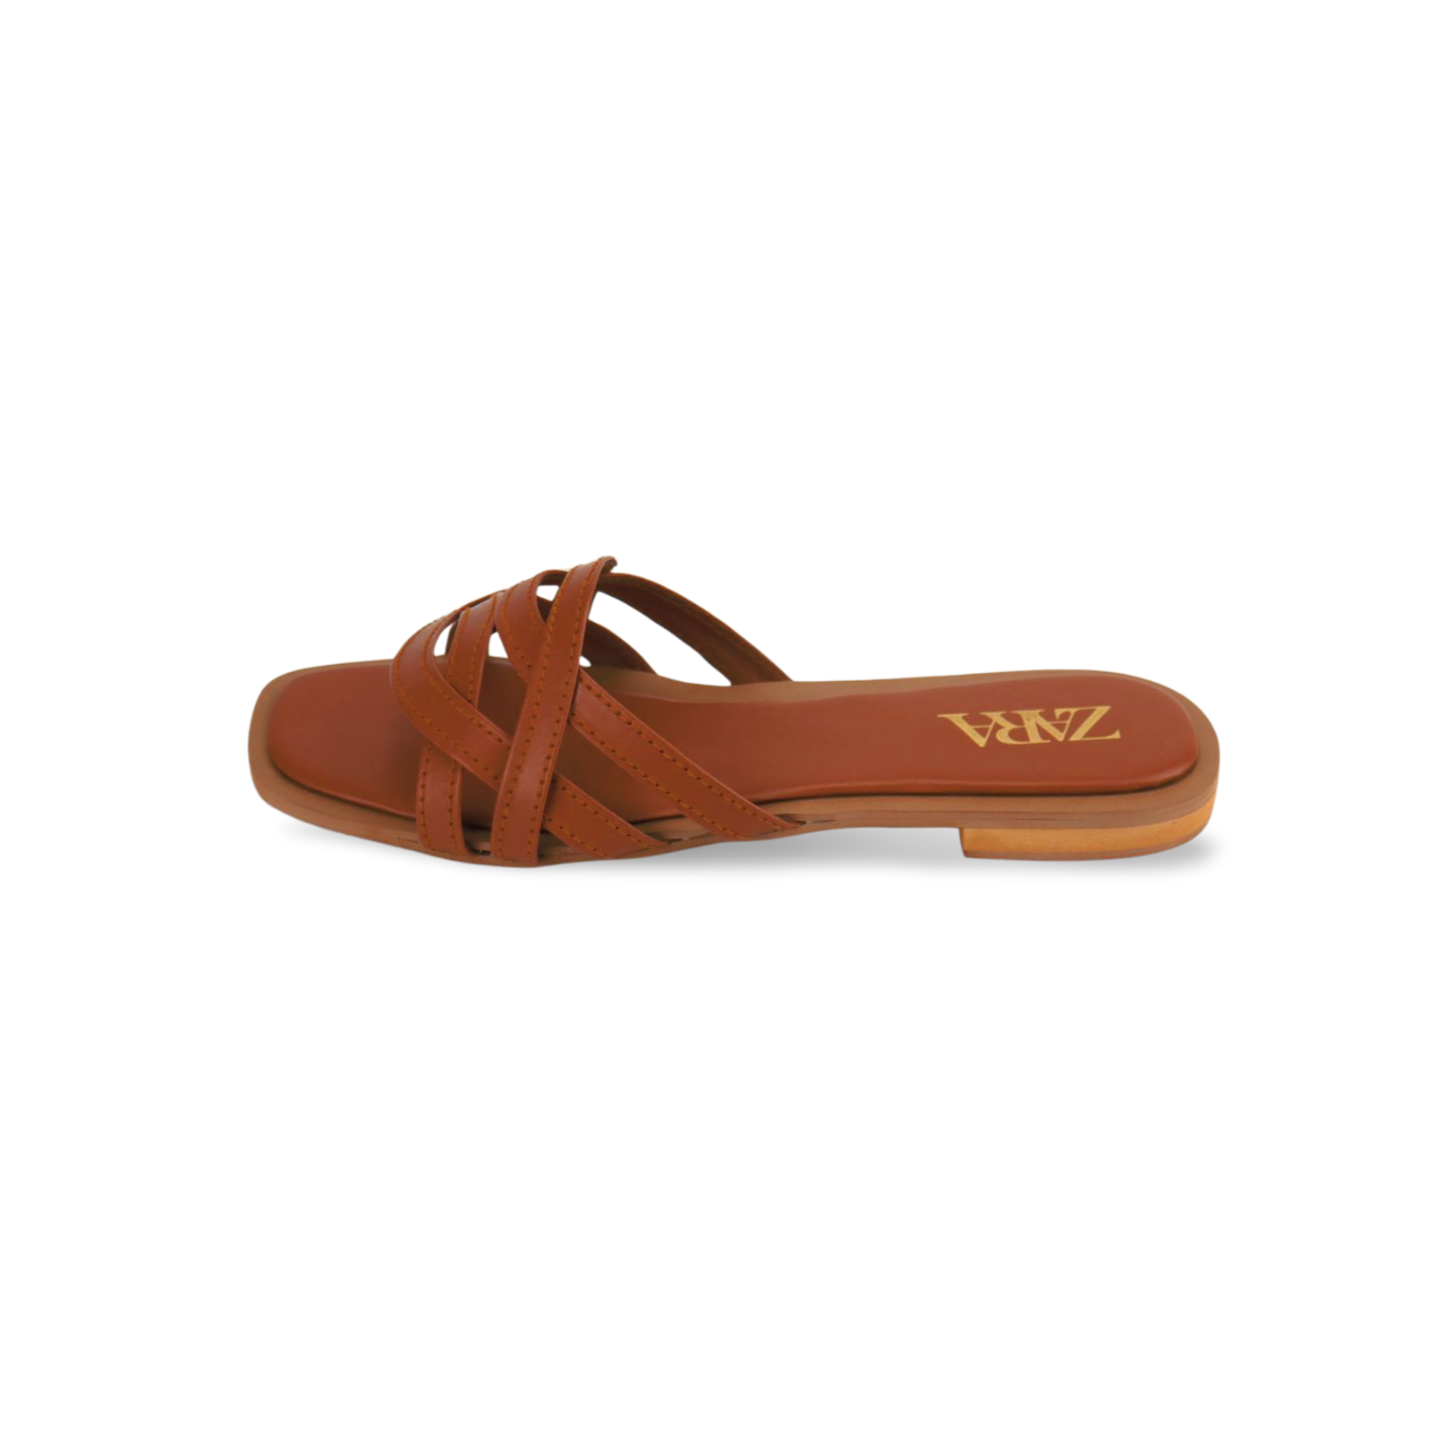 Stylish Soft Strappy Pu Leather Slide Sandals